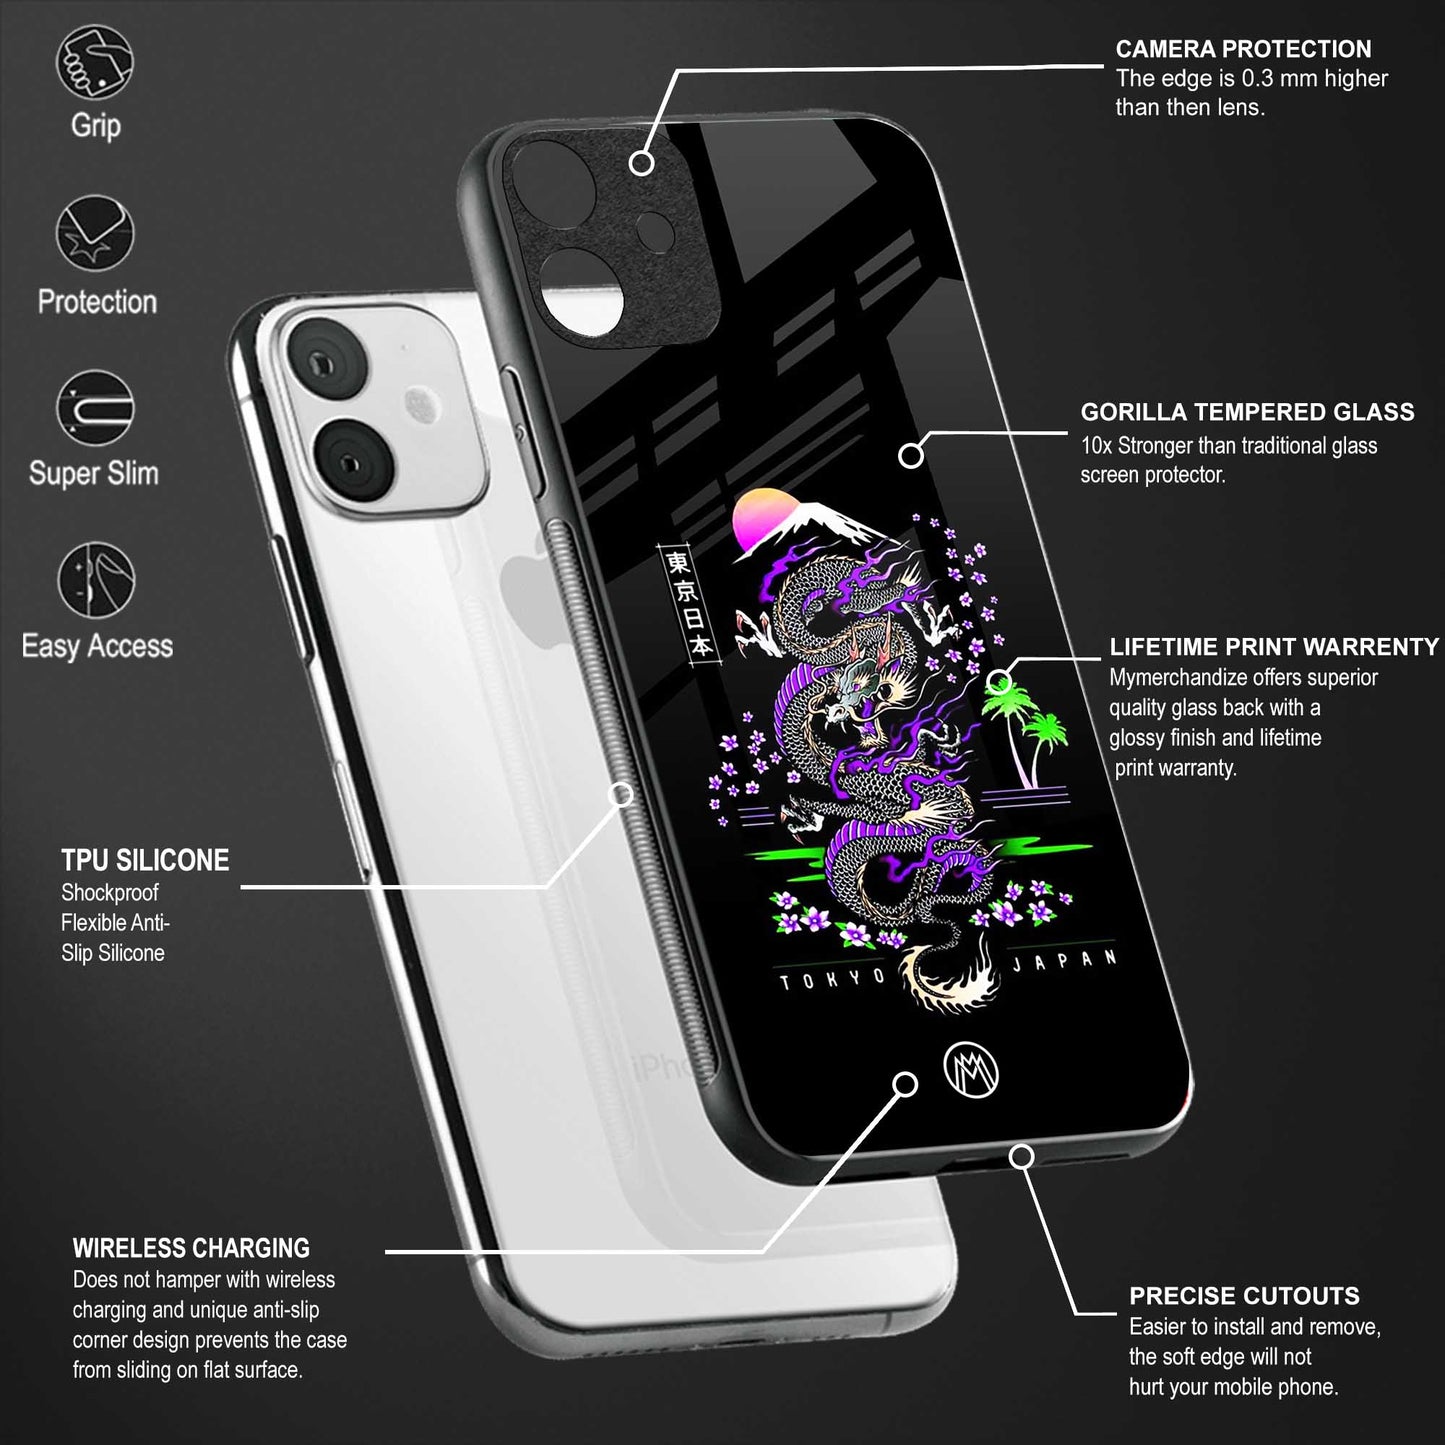 tokyo japan purple dragon black back phone cover | glass case for samsung galaxy m33 5g